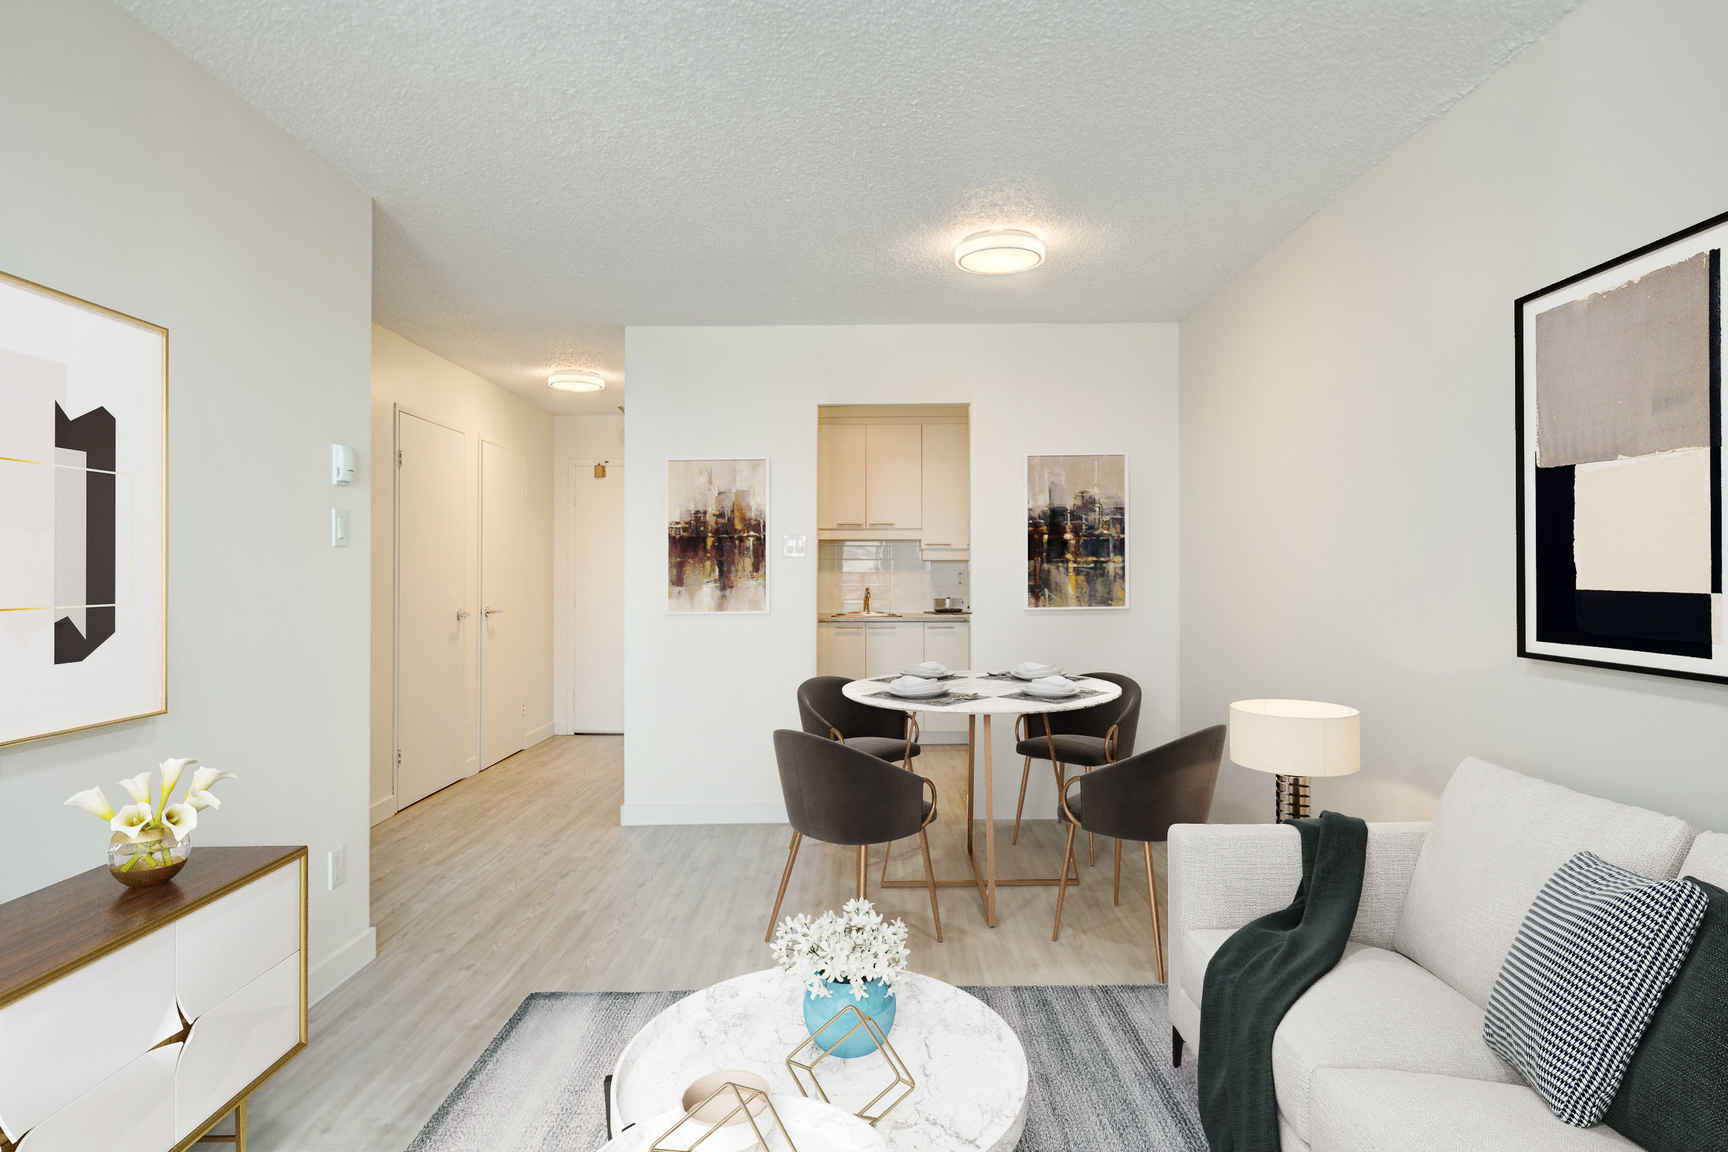 1 bedroom Apartments for rent in Laval at Le Quatre Cent - Photo 01 - RentersPages – L407184